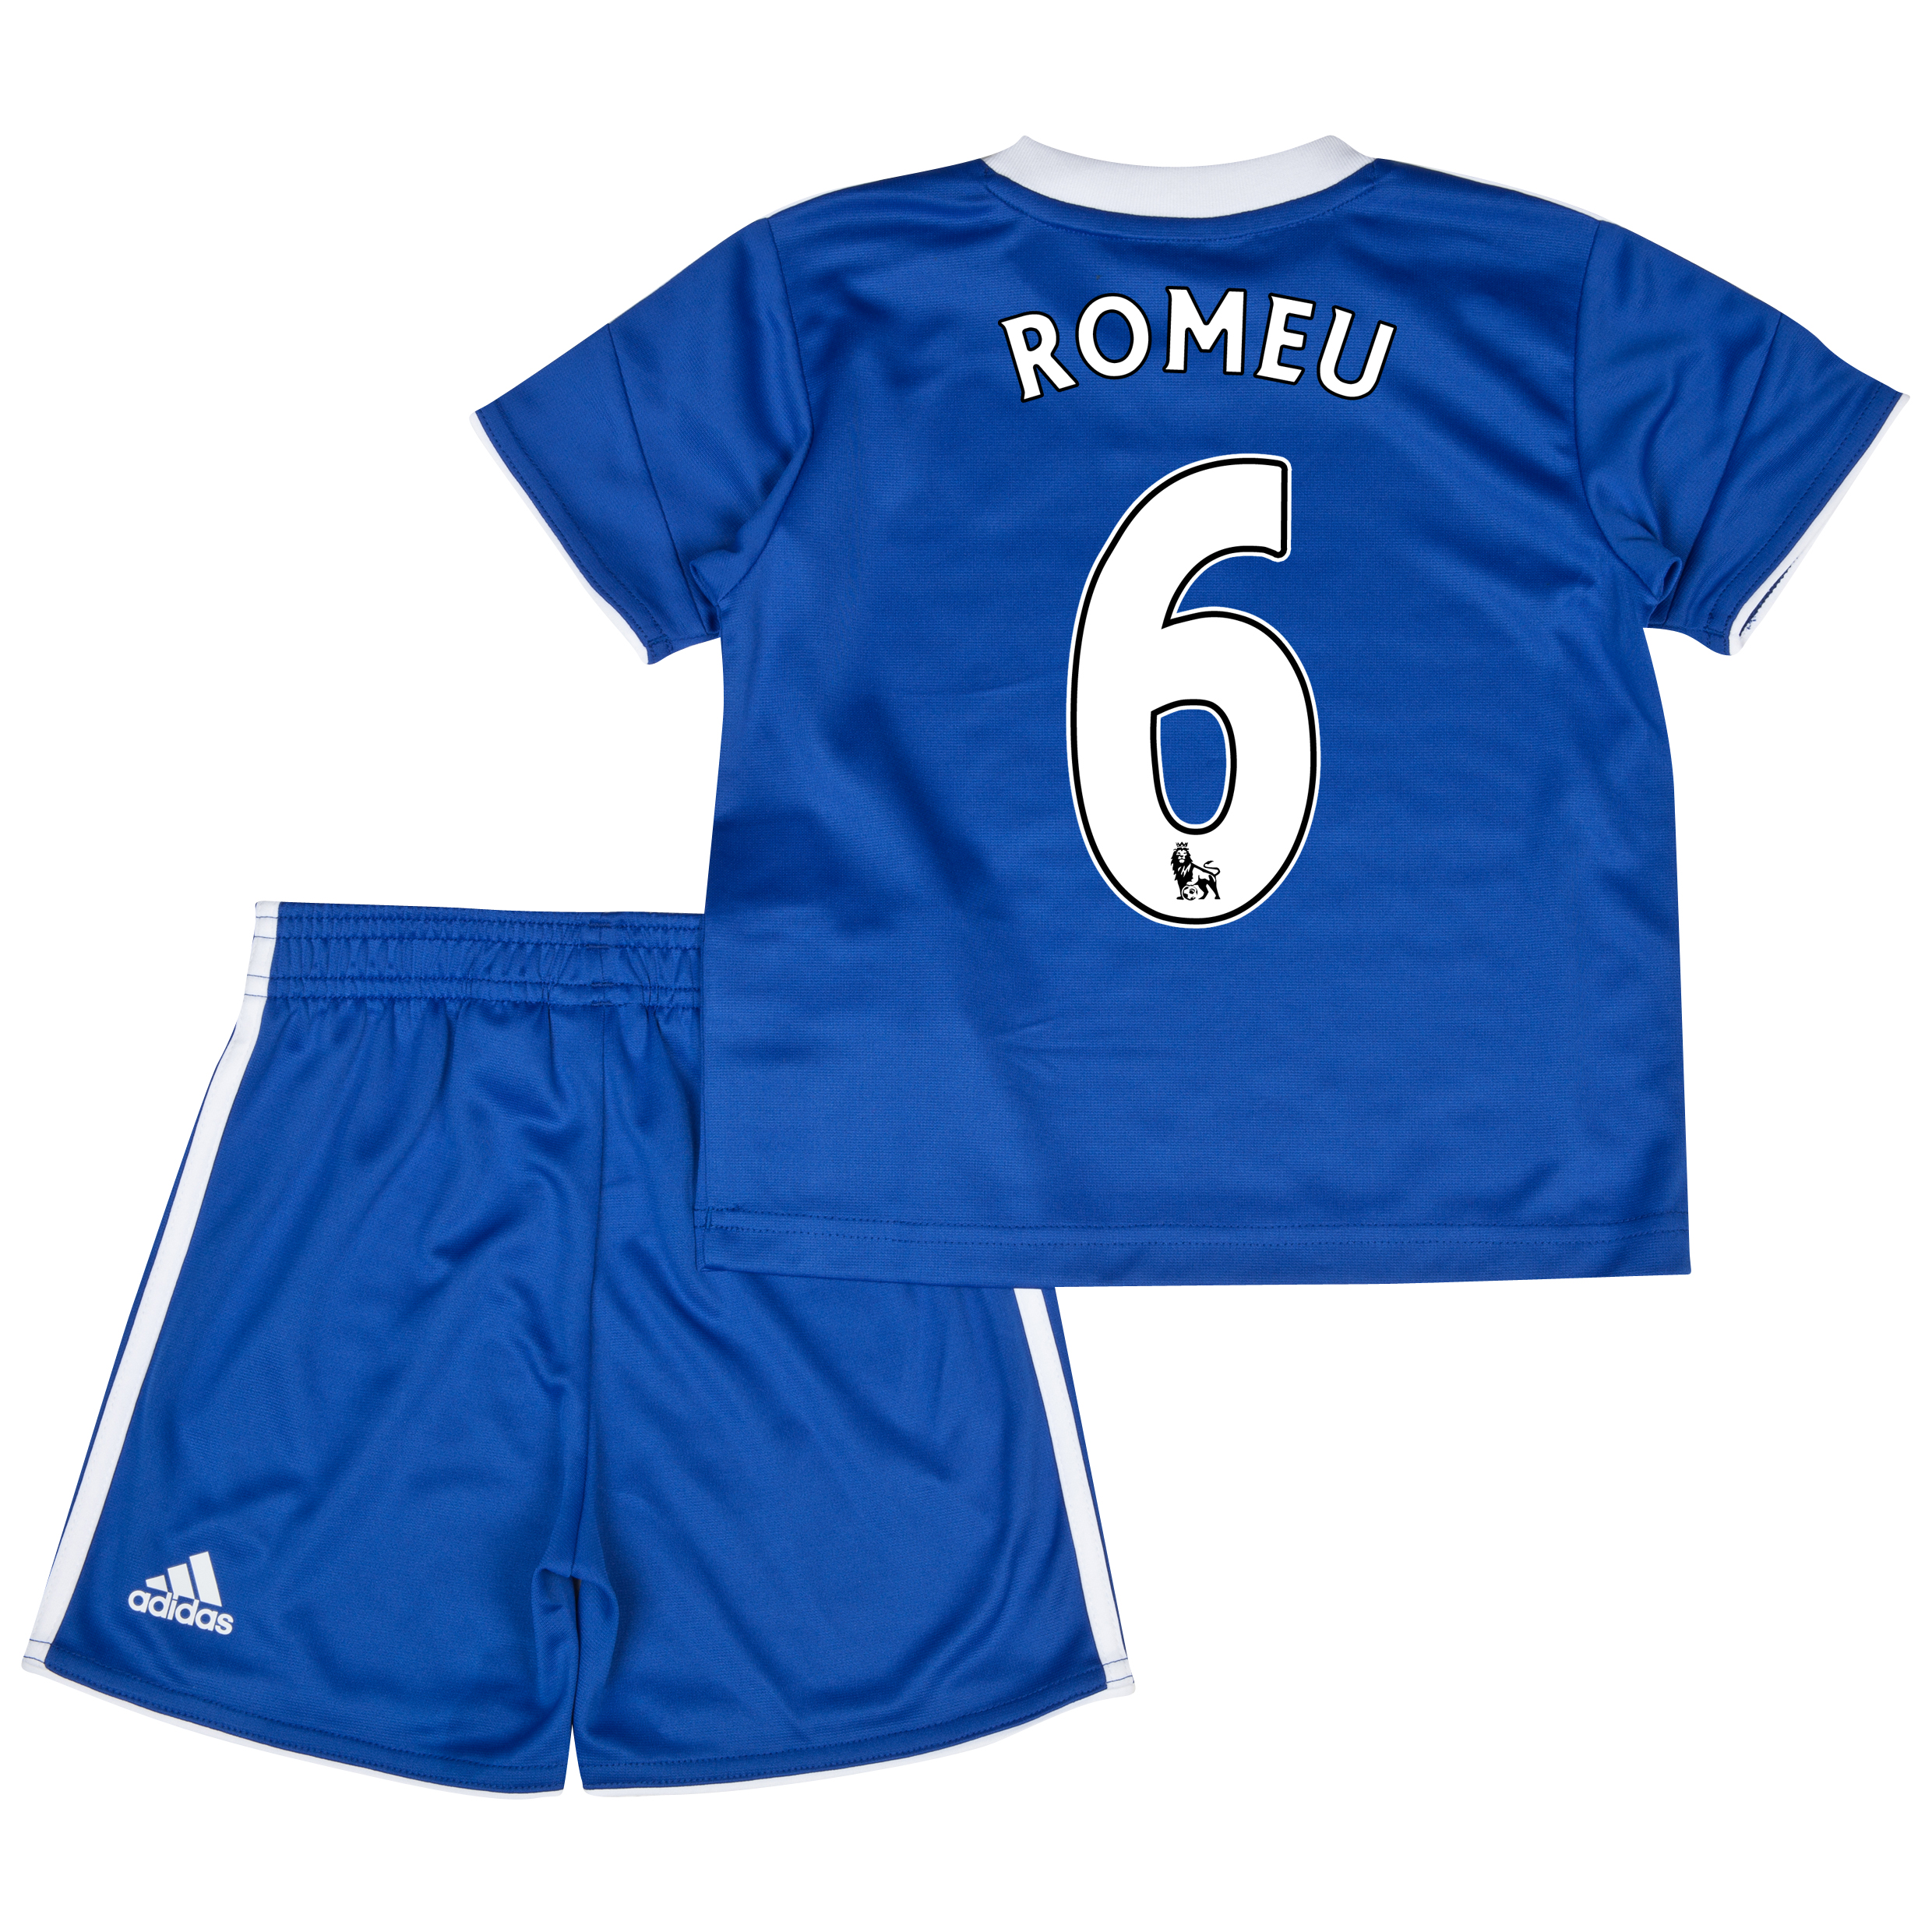 Chelsea Home Mini Kit 2013/14 with Romeu 6 printing